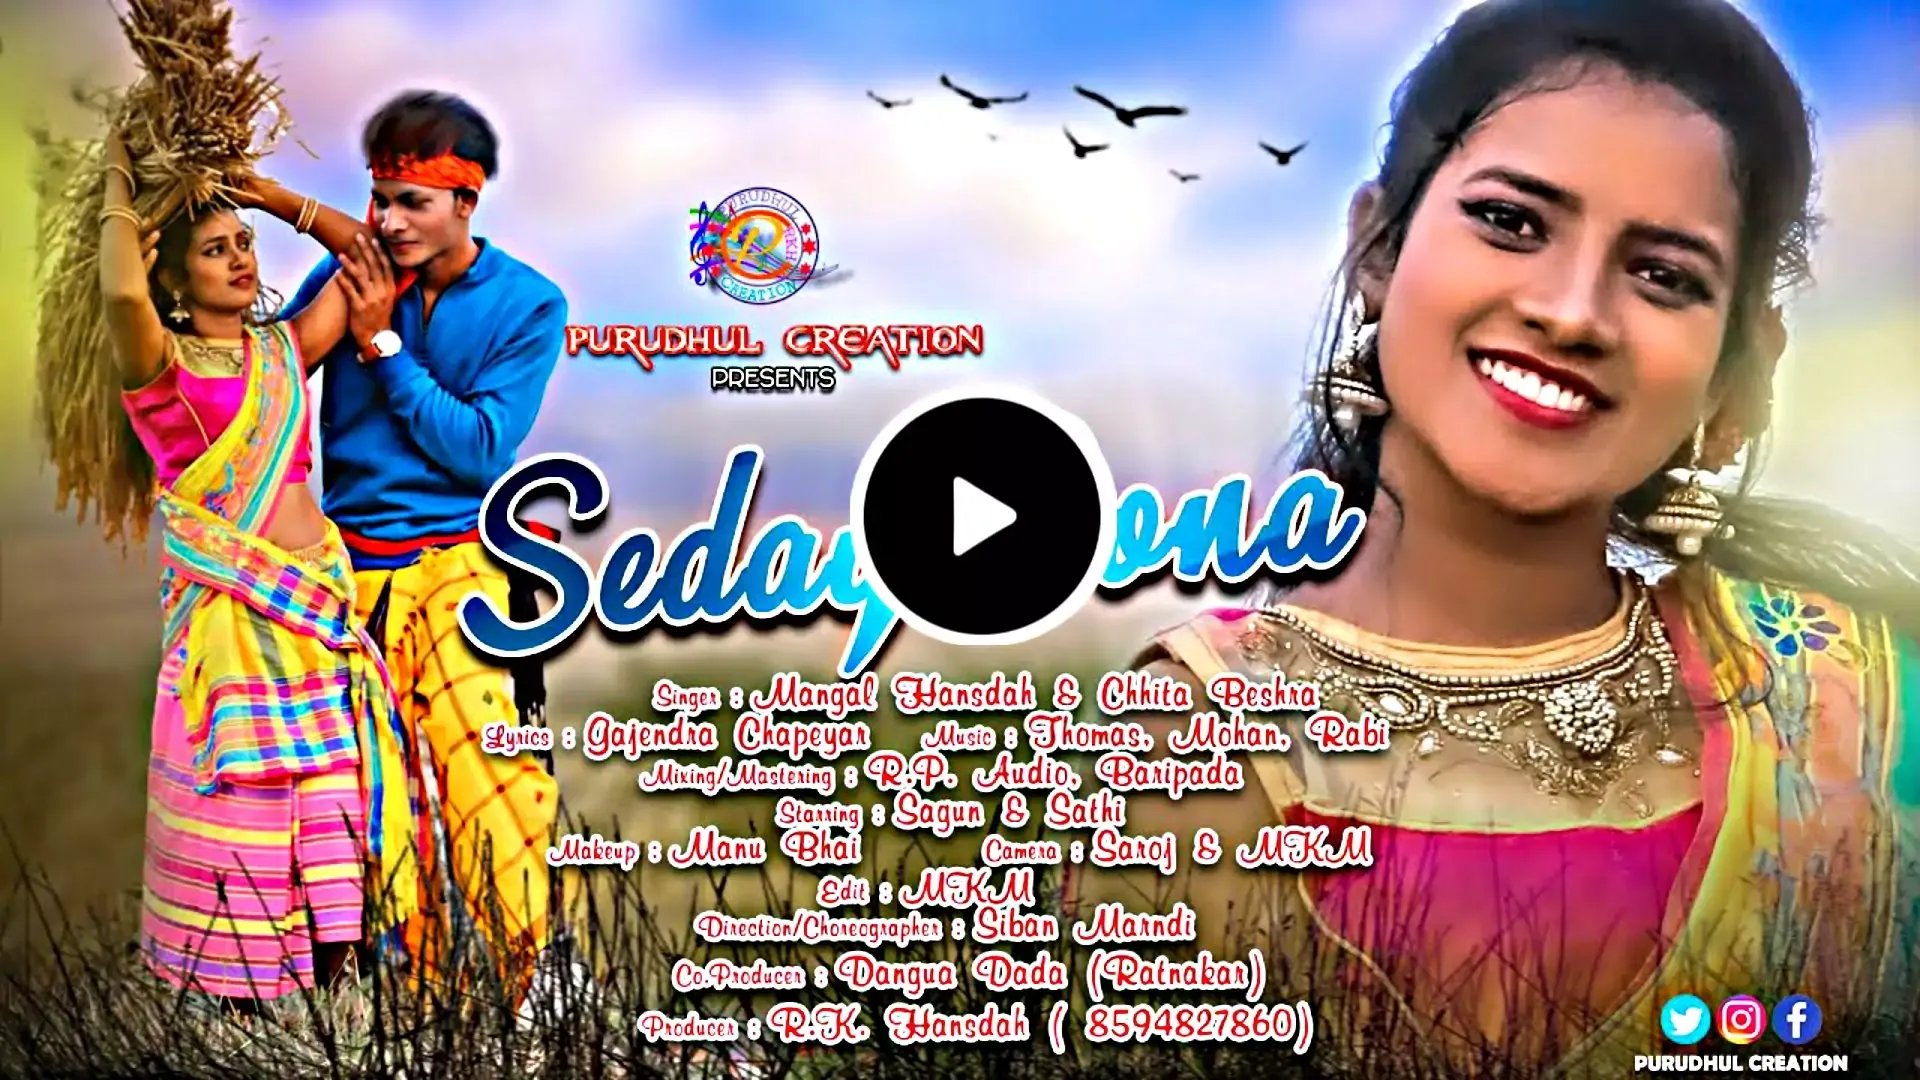 Seday Dona Am Salah Sagai  New Santali Video Song 2021 Full review